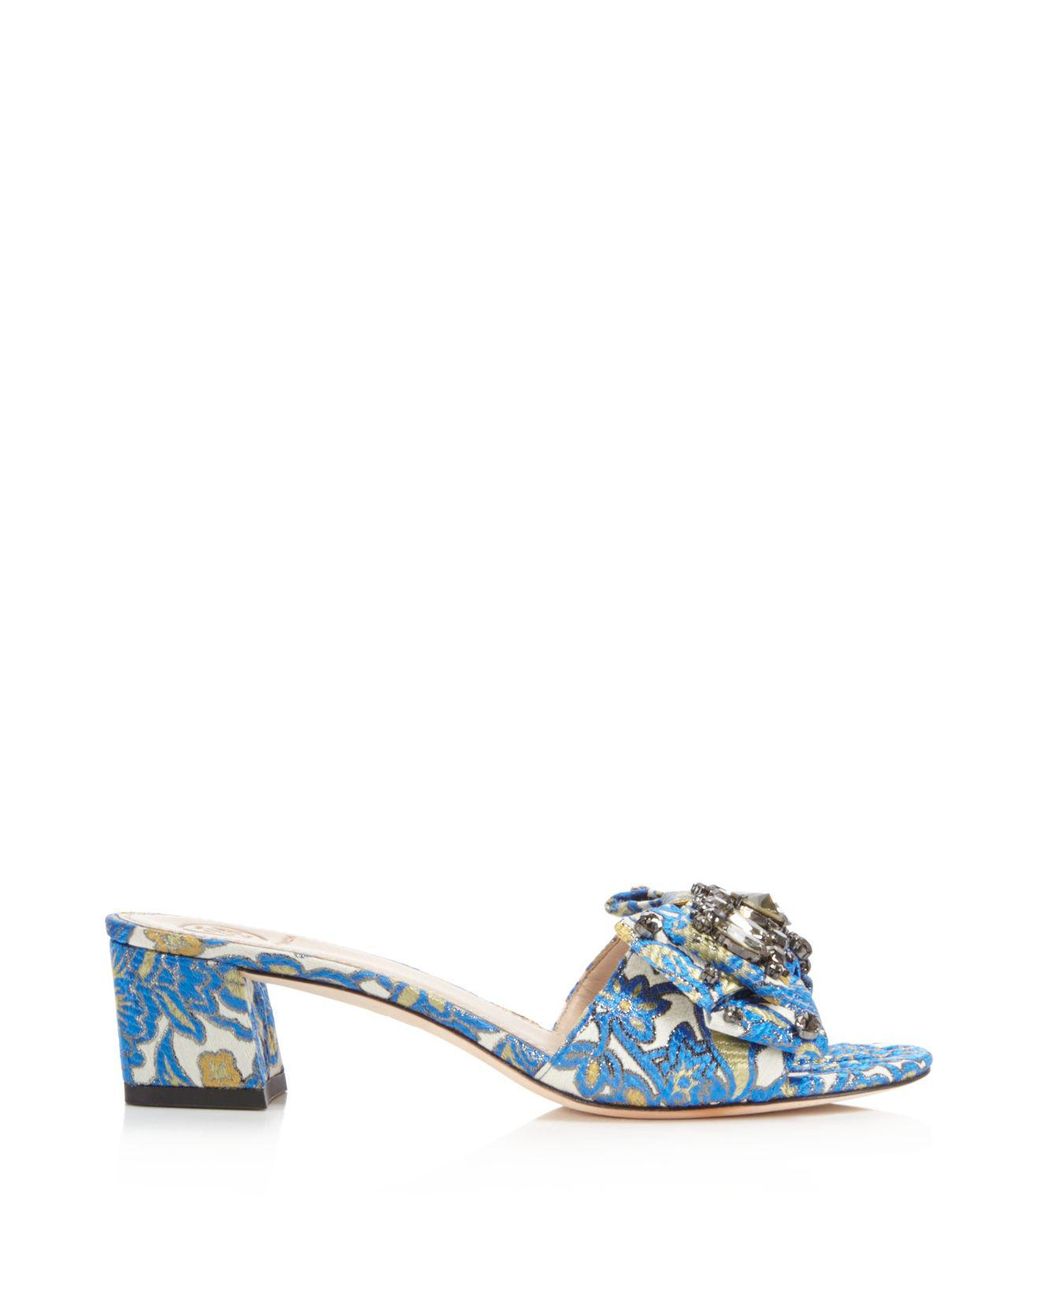 Tory Burch Valentina Brocade Embellished Bow Slide Sandals in Blue | Lyst